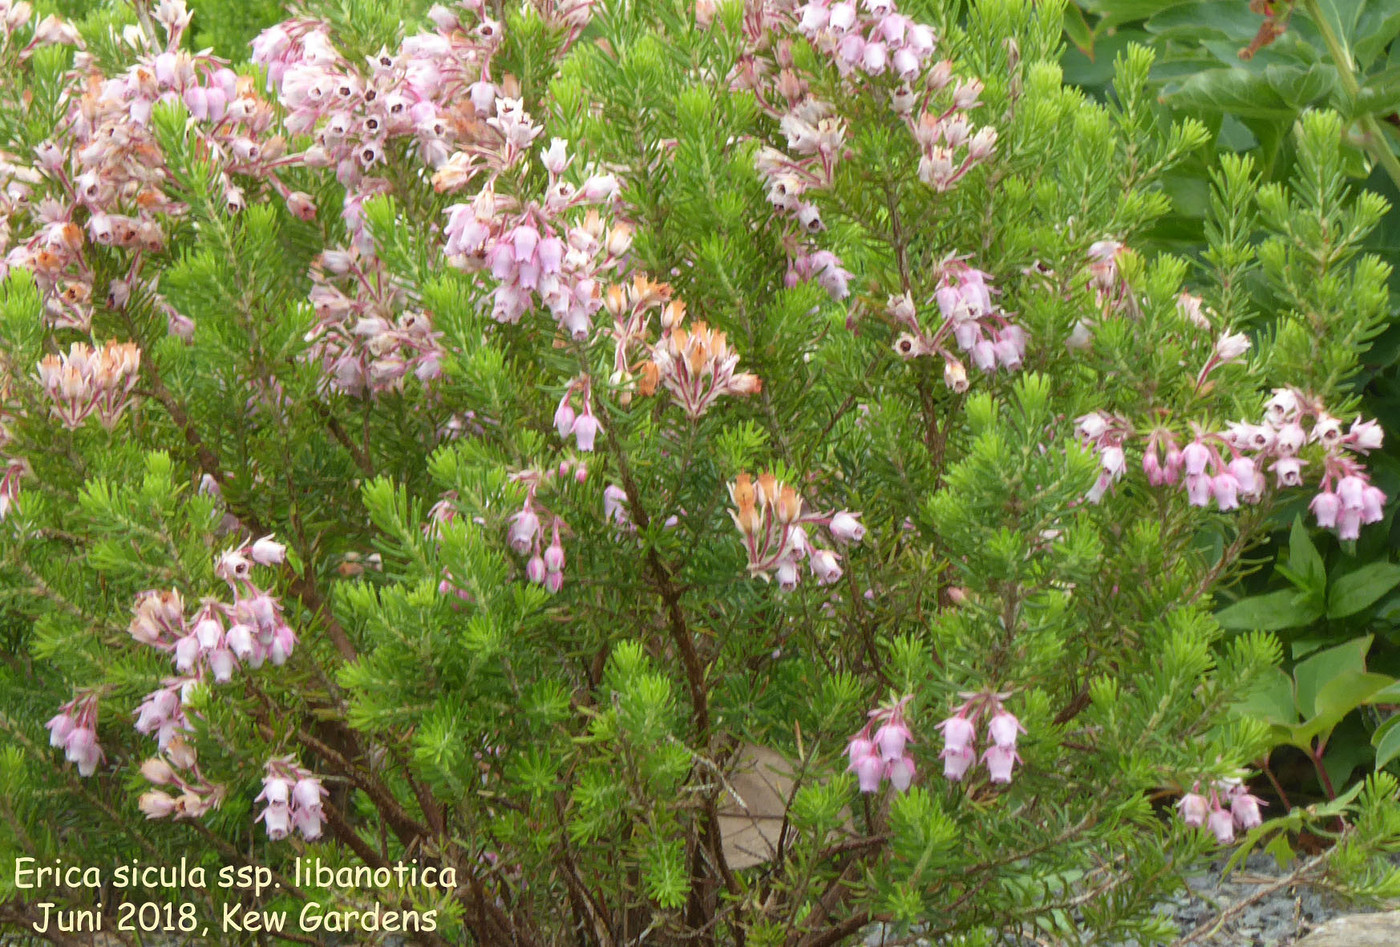 Erica sicula ssp. libanotica